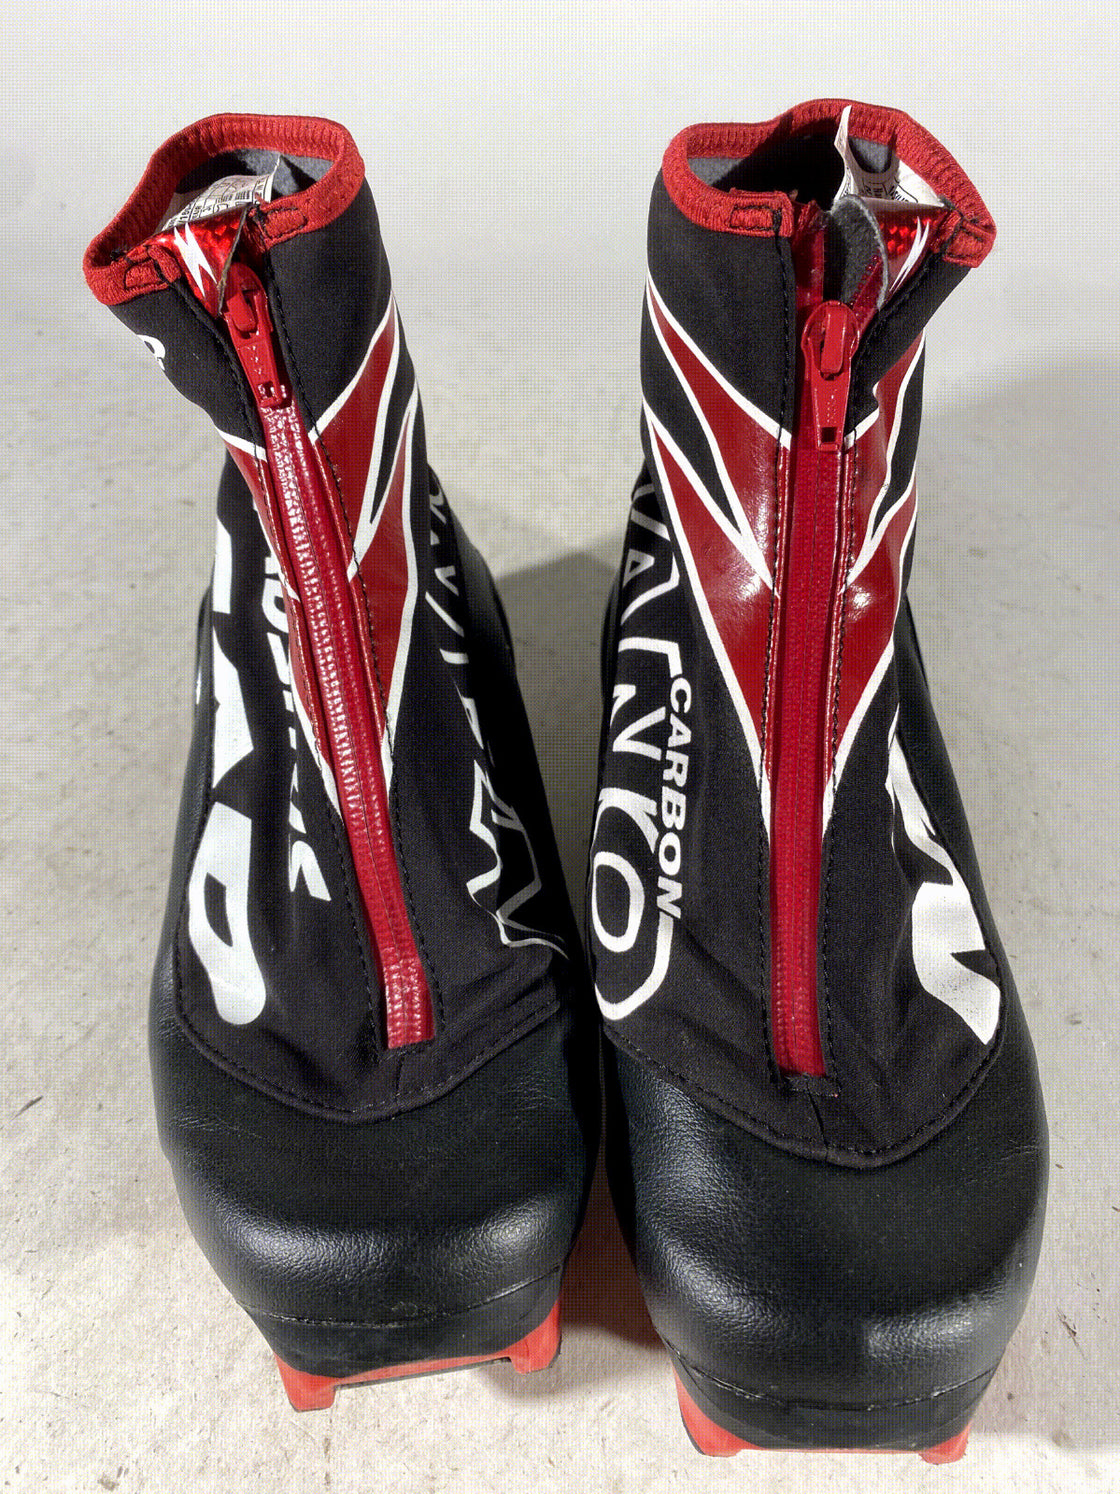 Madshus Nano CLC Nordic Cross Country Ski Boots Size EU38 US5.5 for NNN